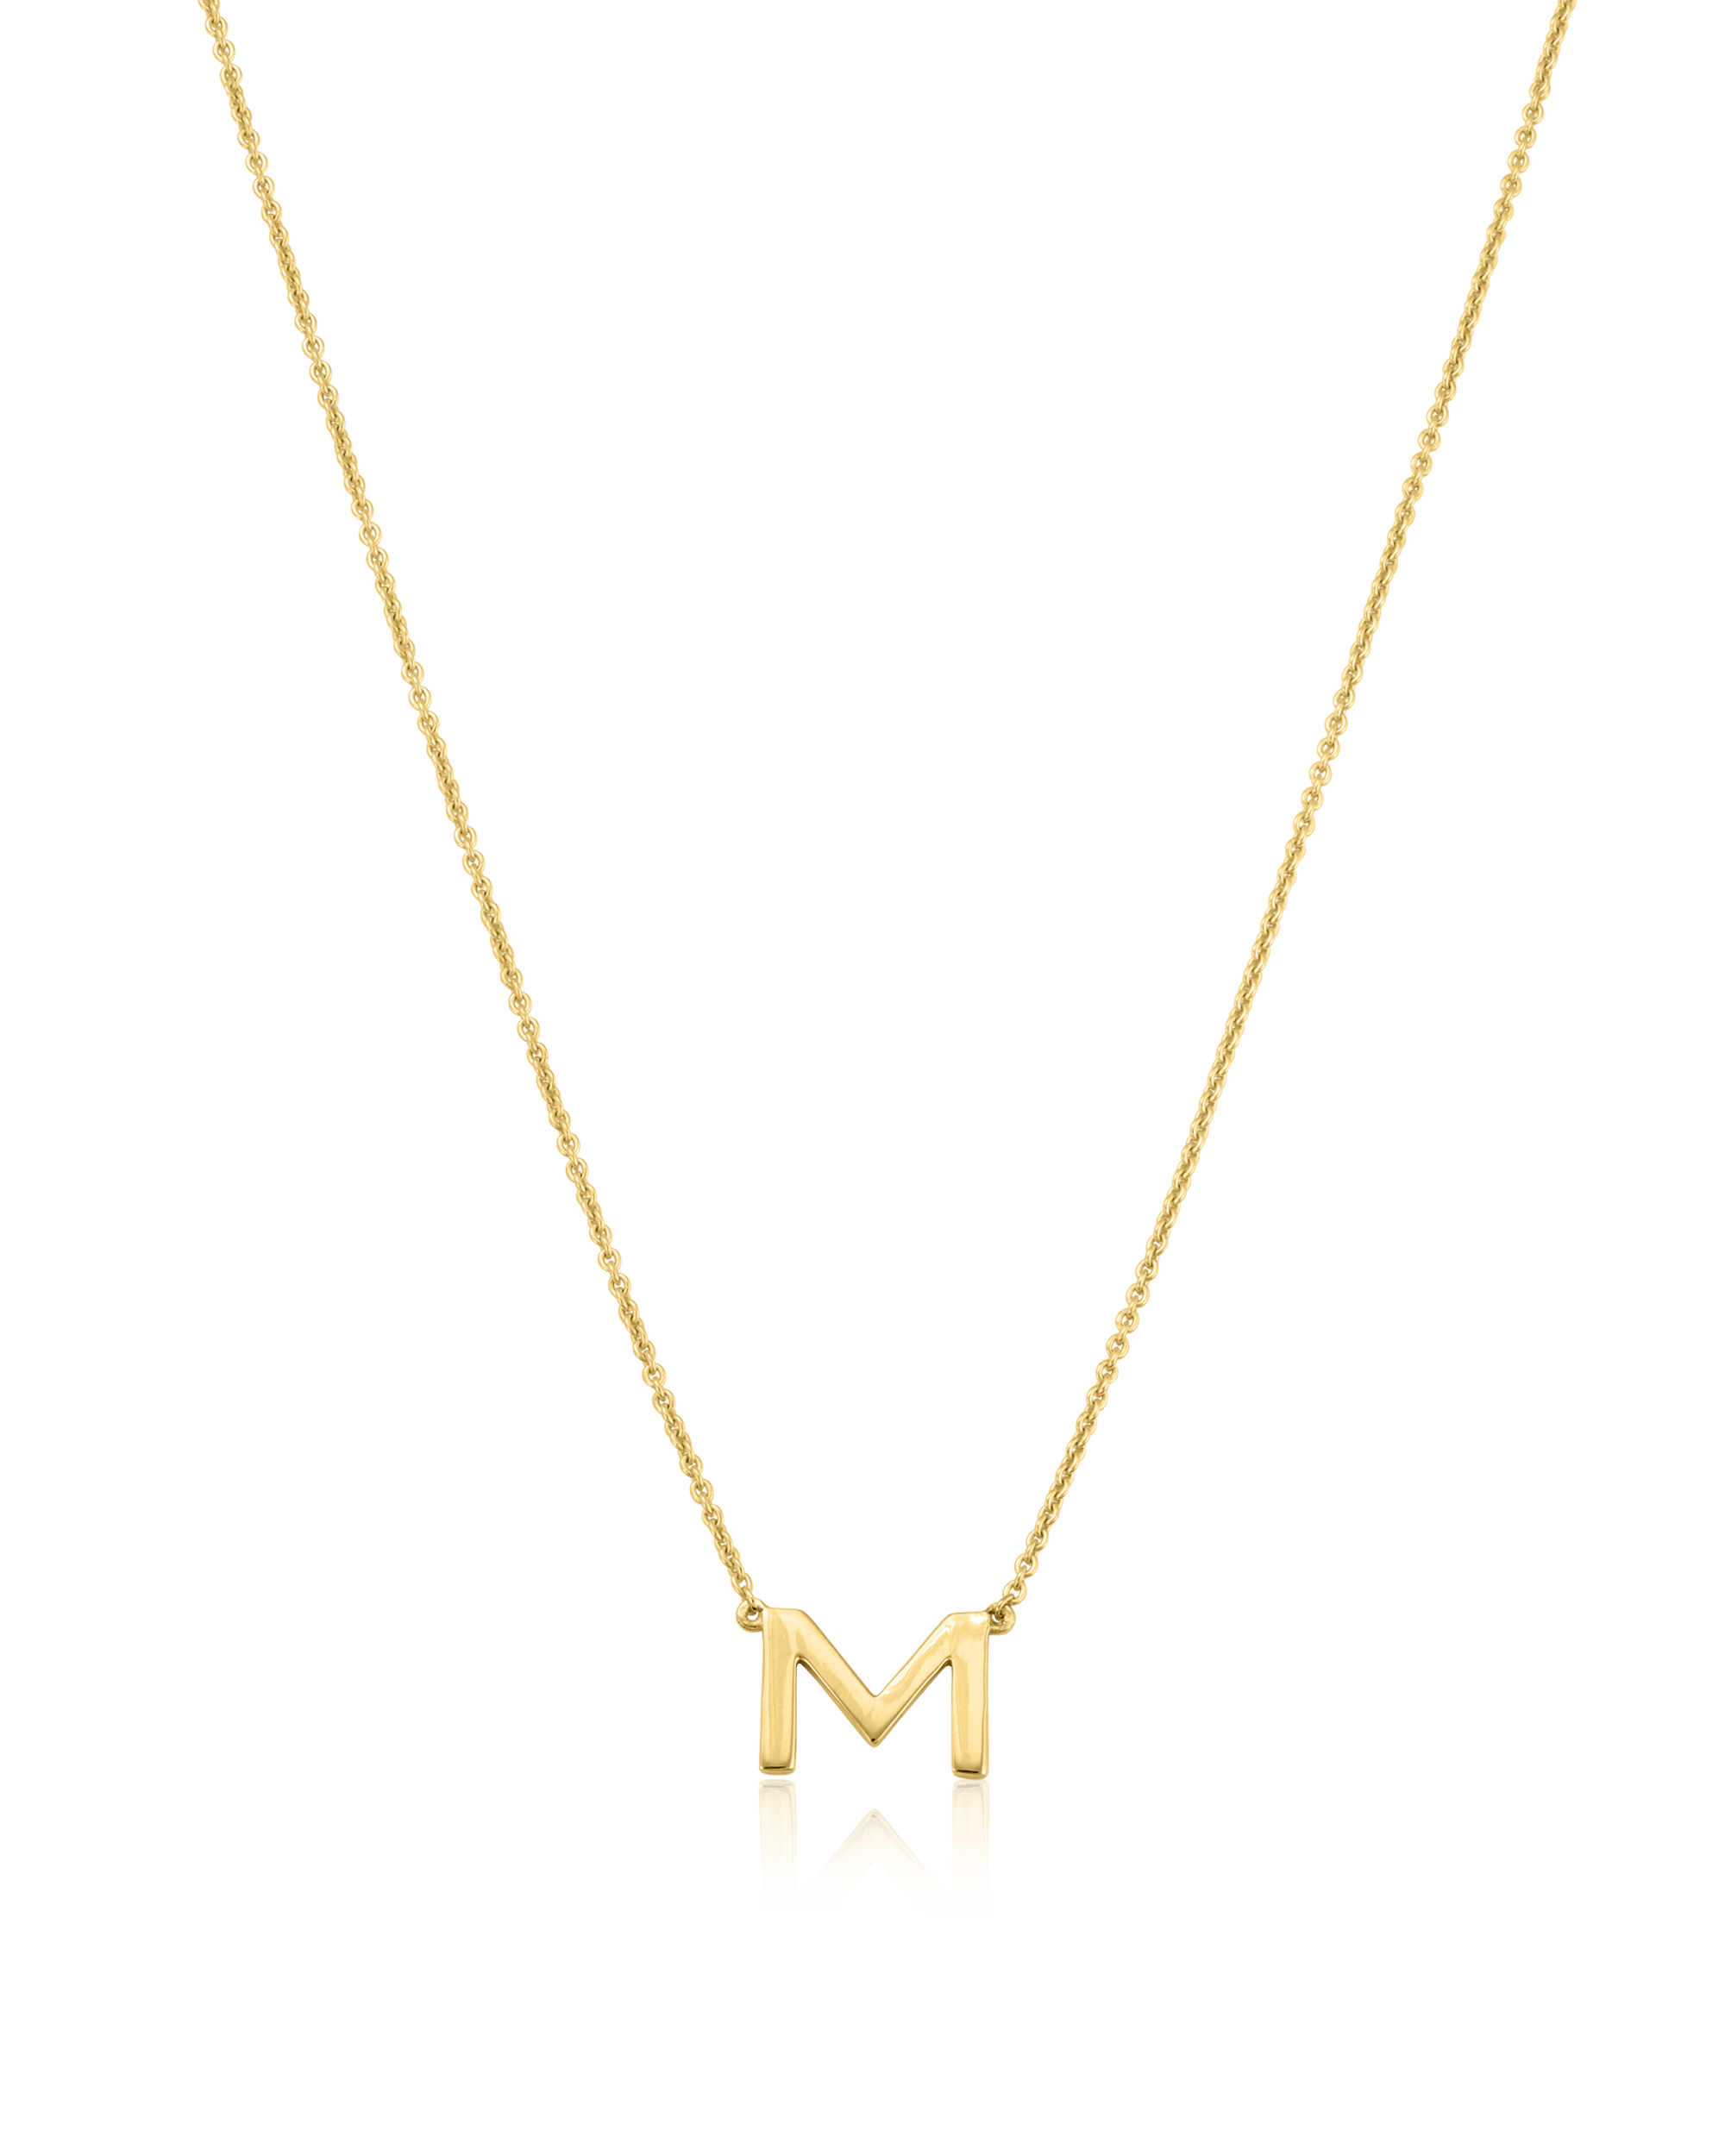 Louis Vuitton Aquatics Pendant Necklace